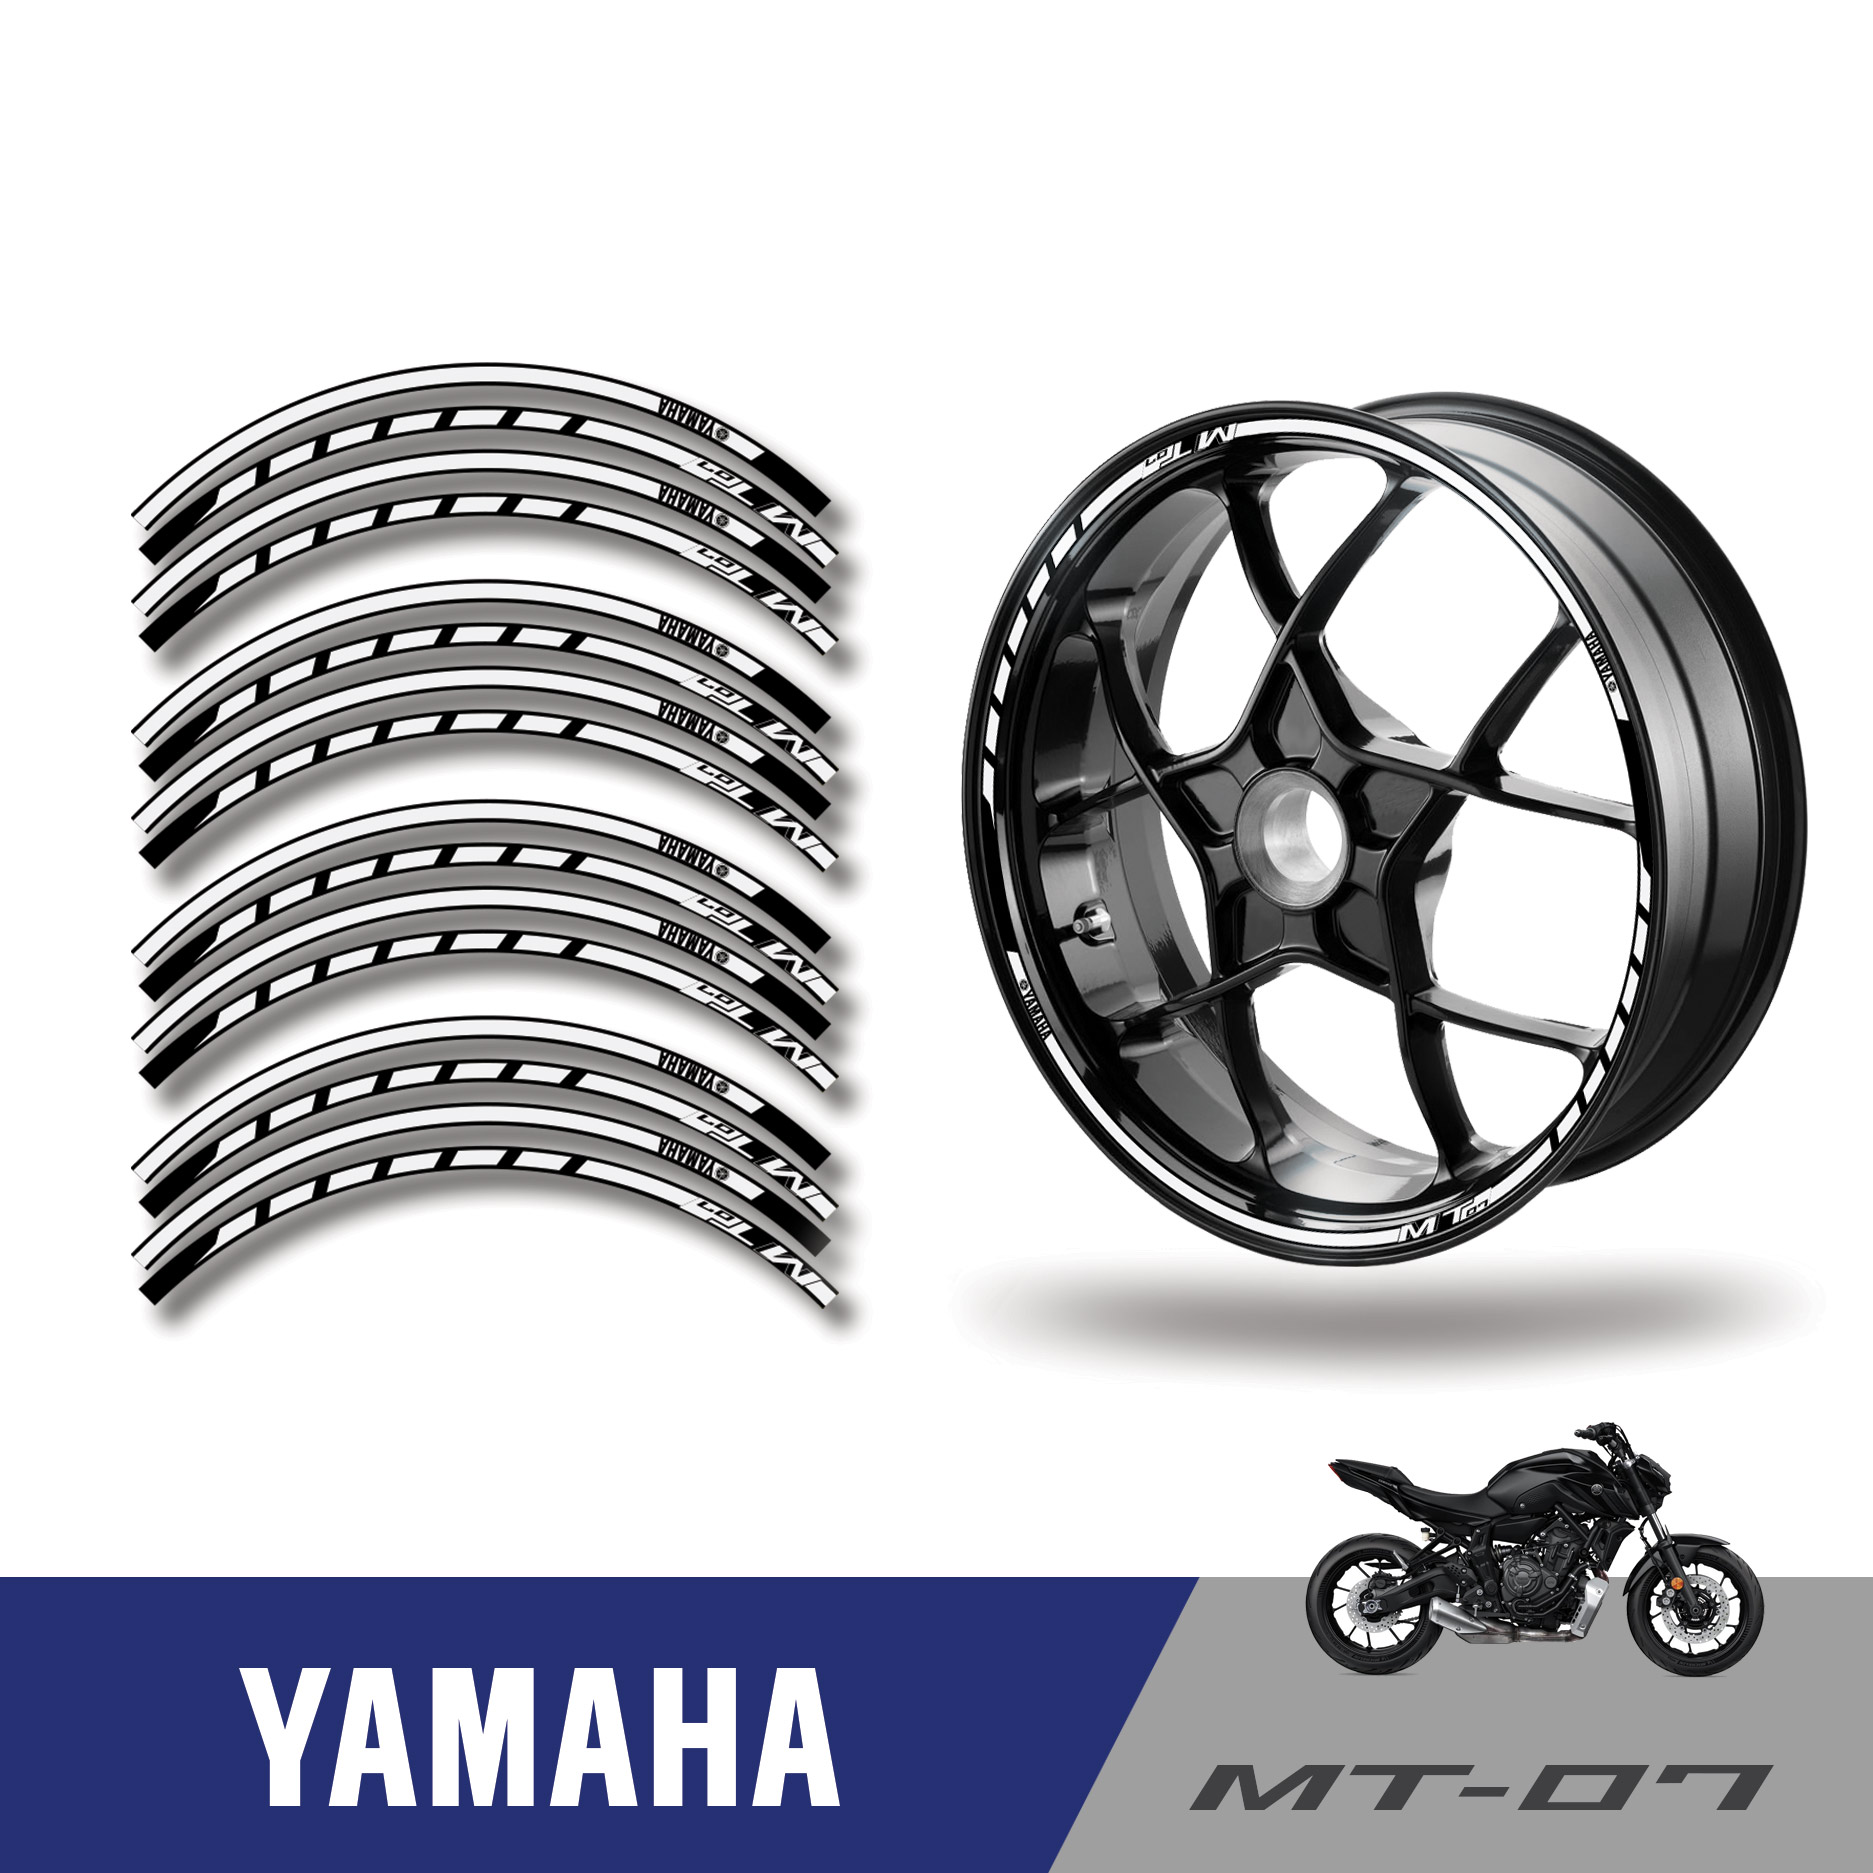 Yamaha MT-07 Wrath Wheel Stickers - Premium Design - SpinningStickers